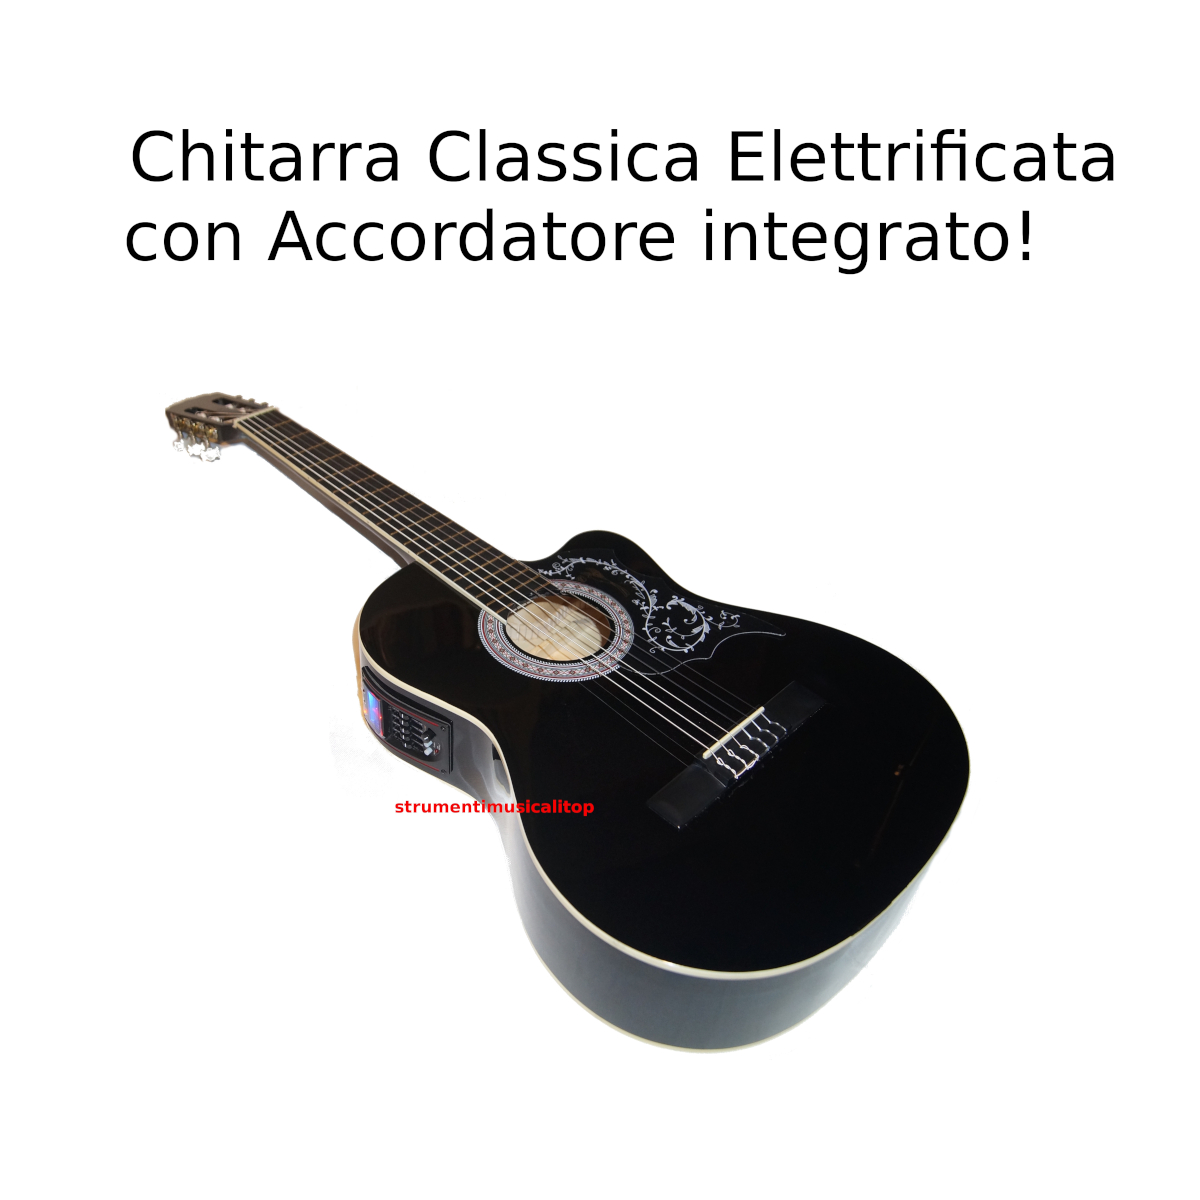 Chitarra Classica Elettrificata